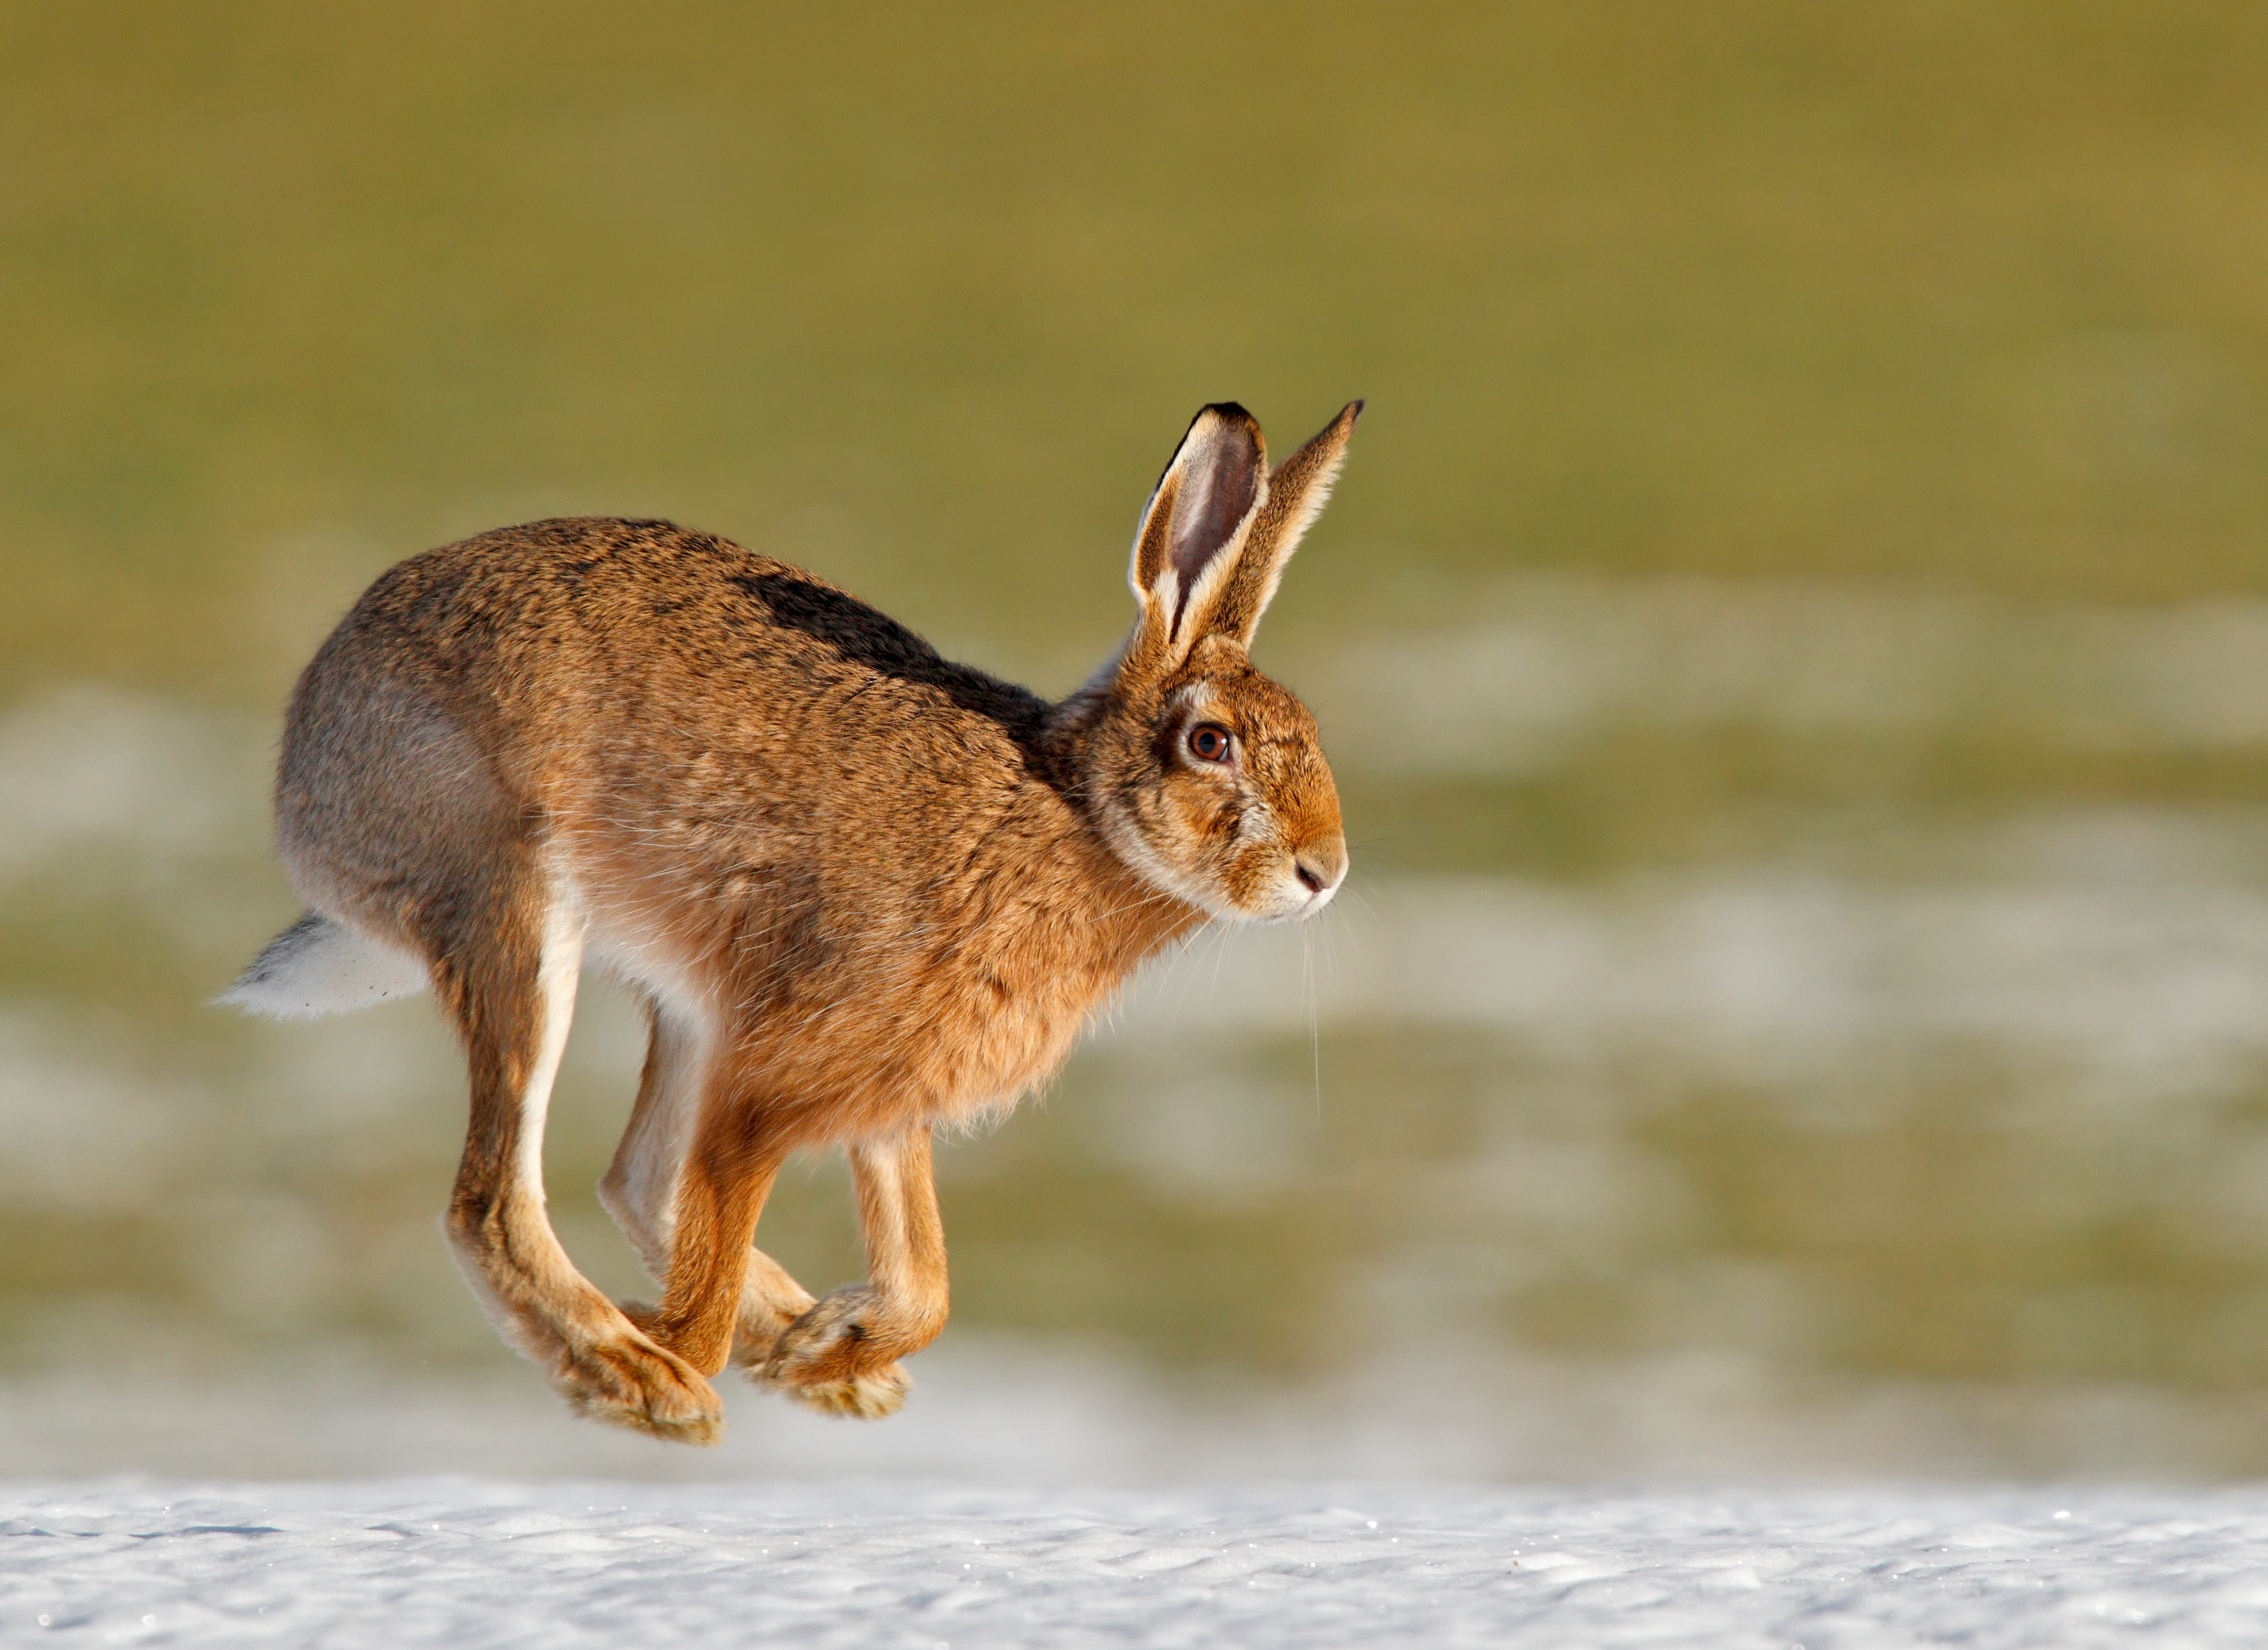 The High-spirited Hare